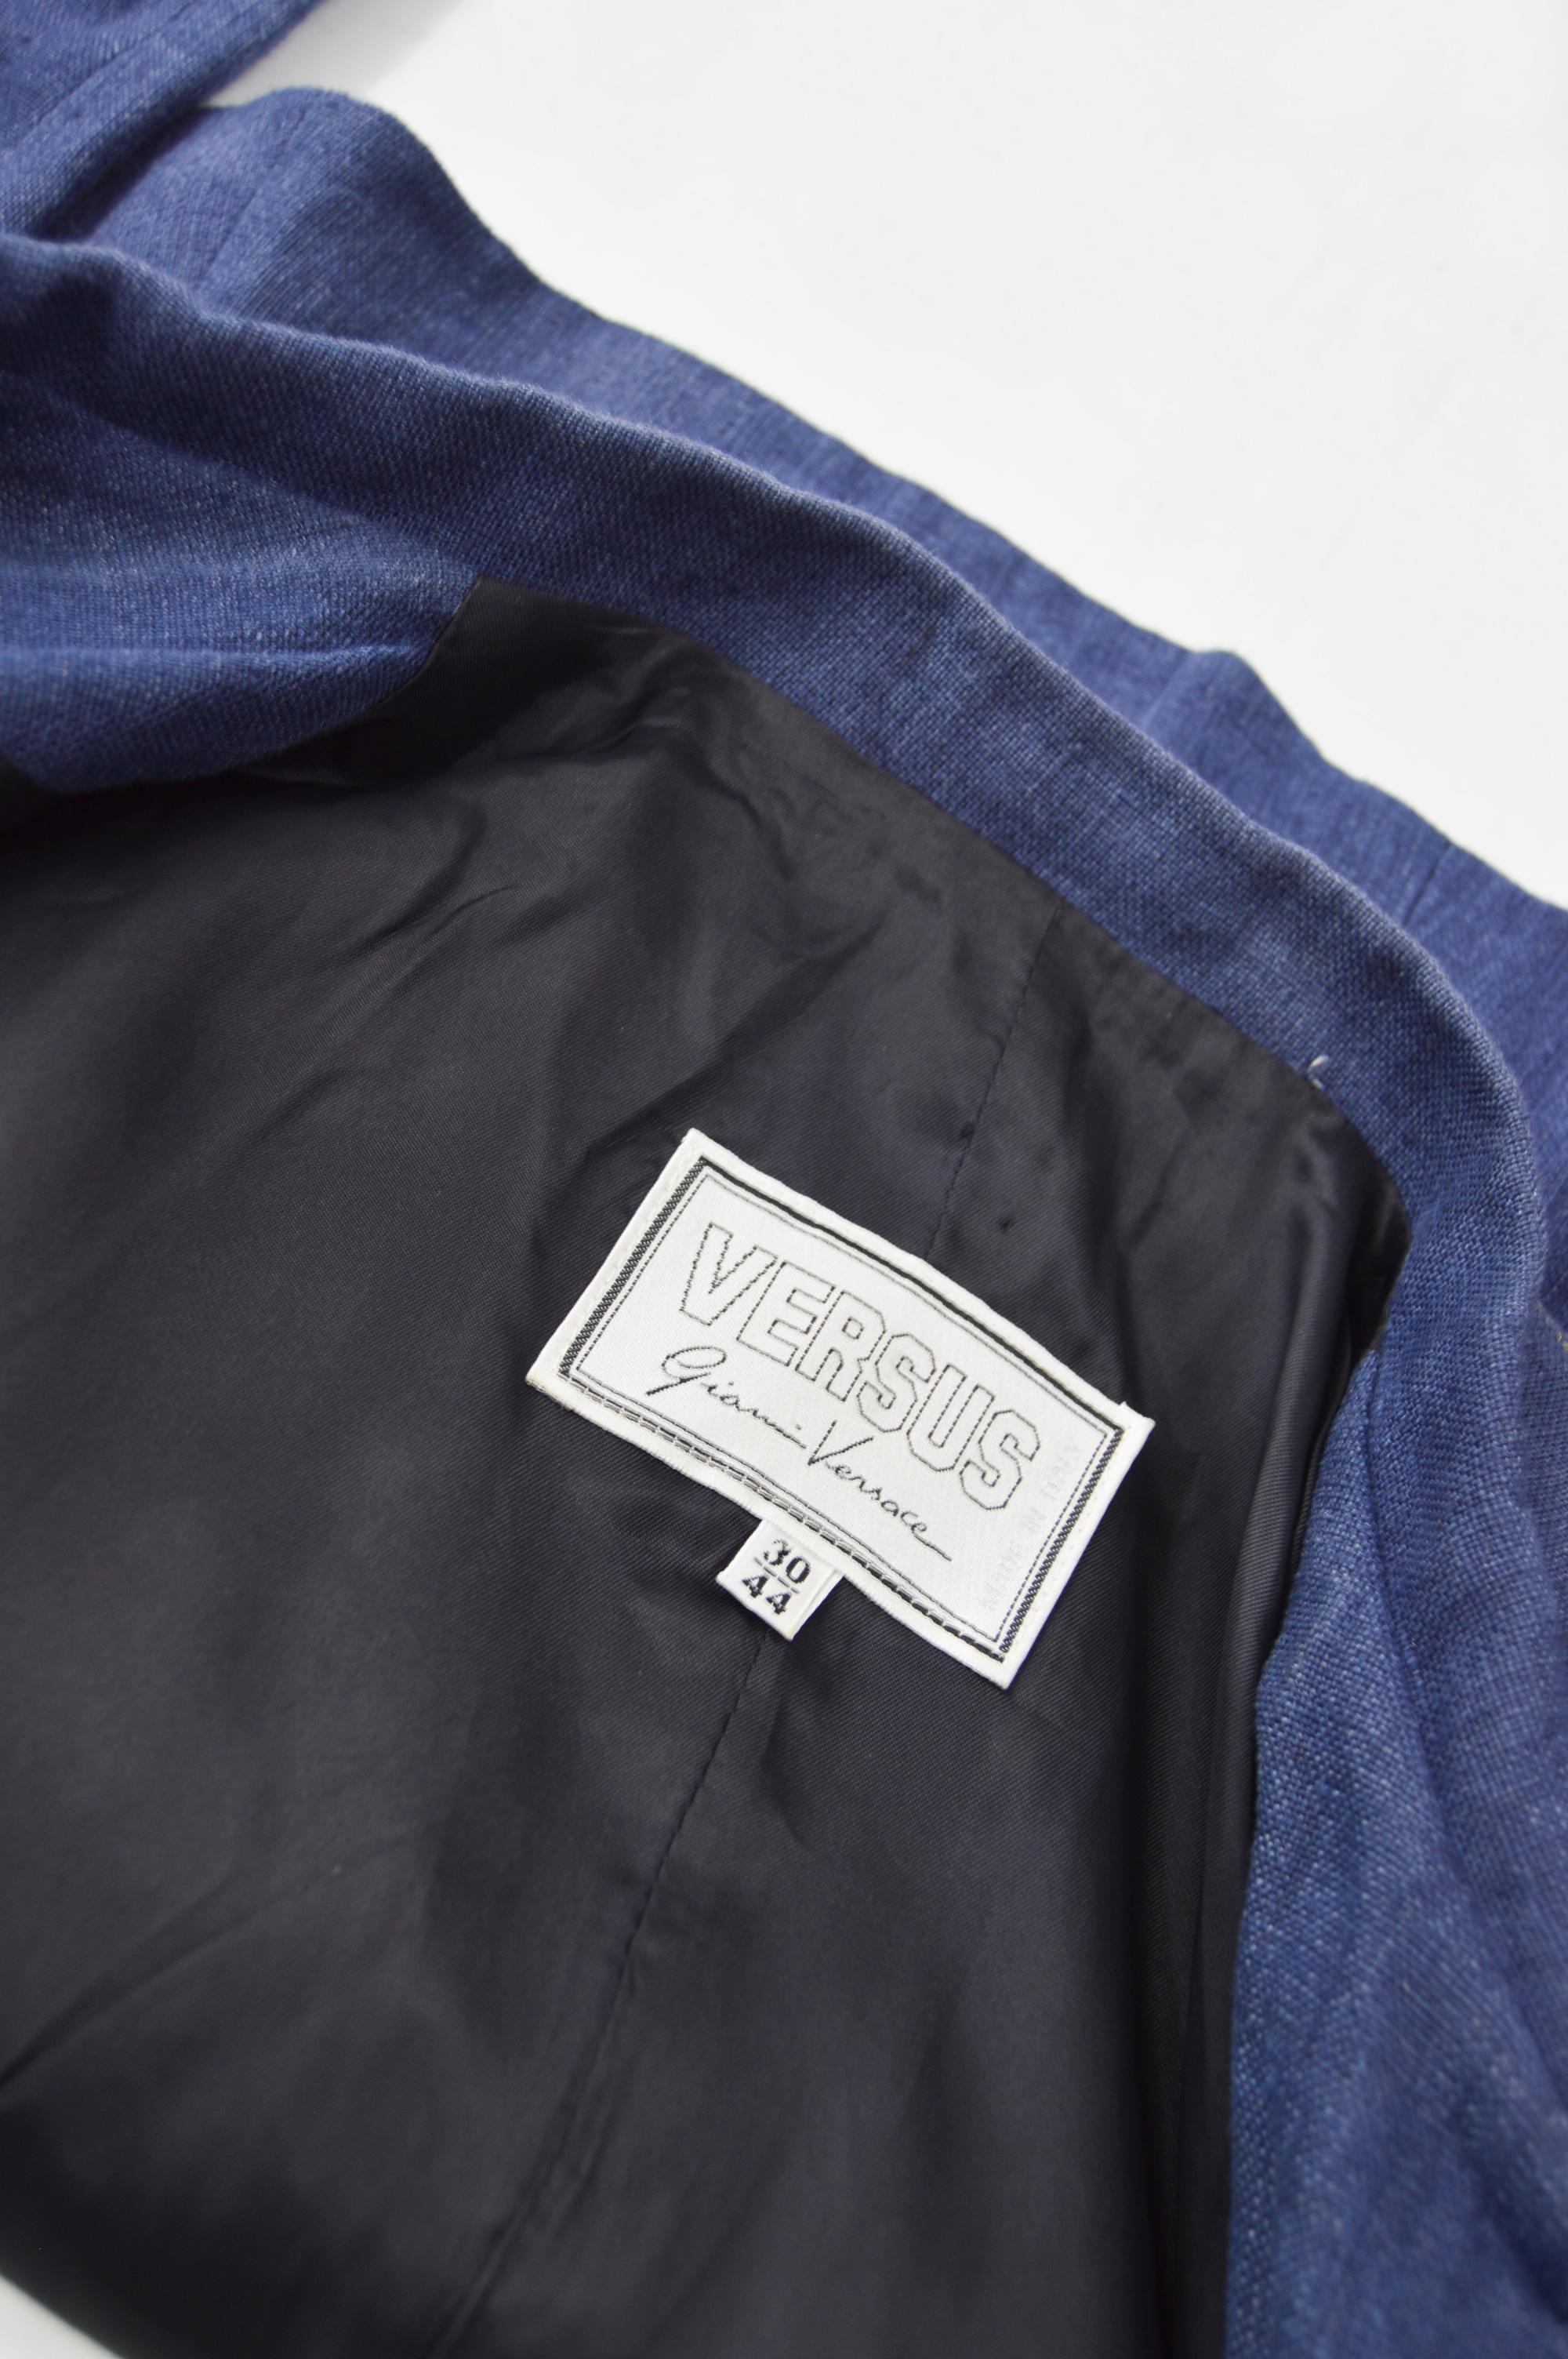 Gianni Versace Versus Vintage Blue Linen Jacket For Sale 4